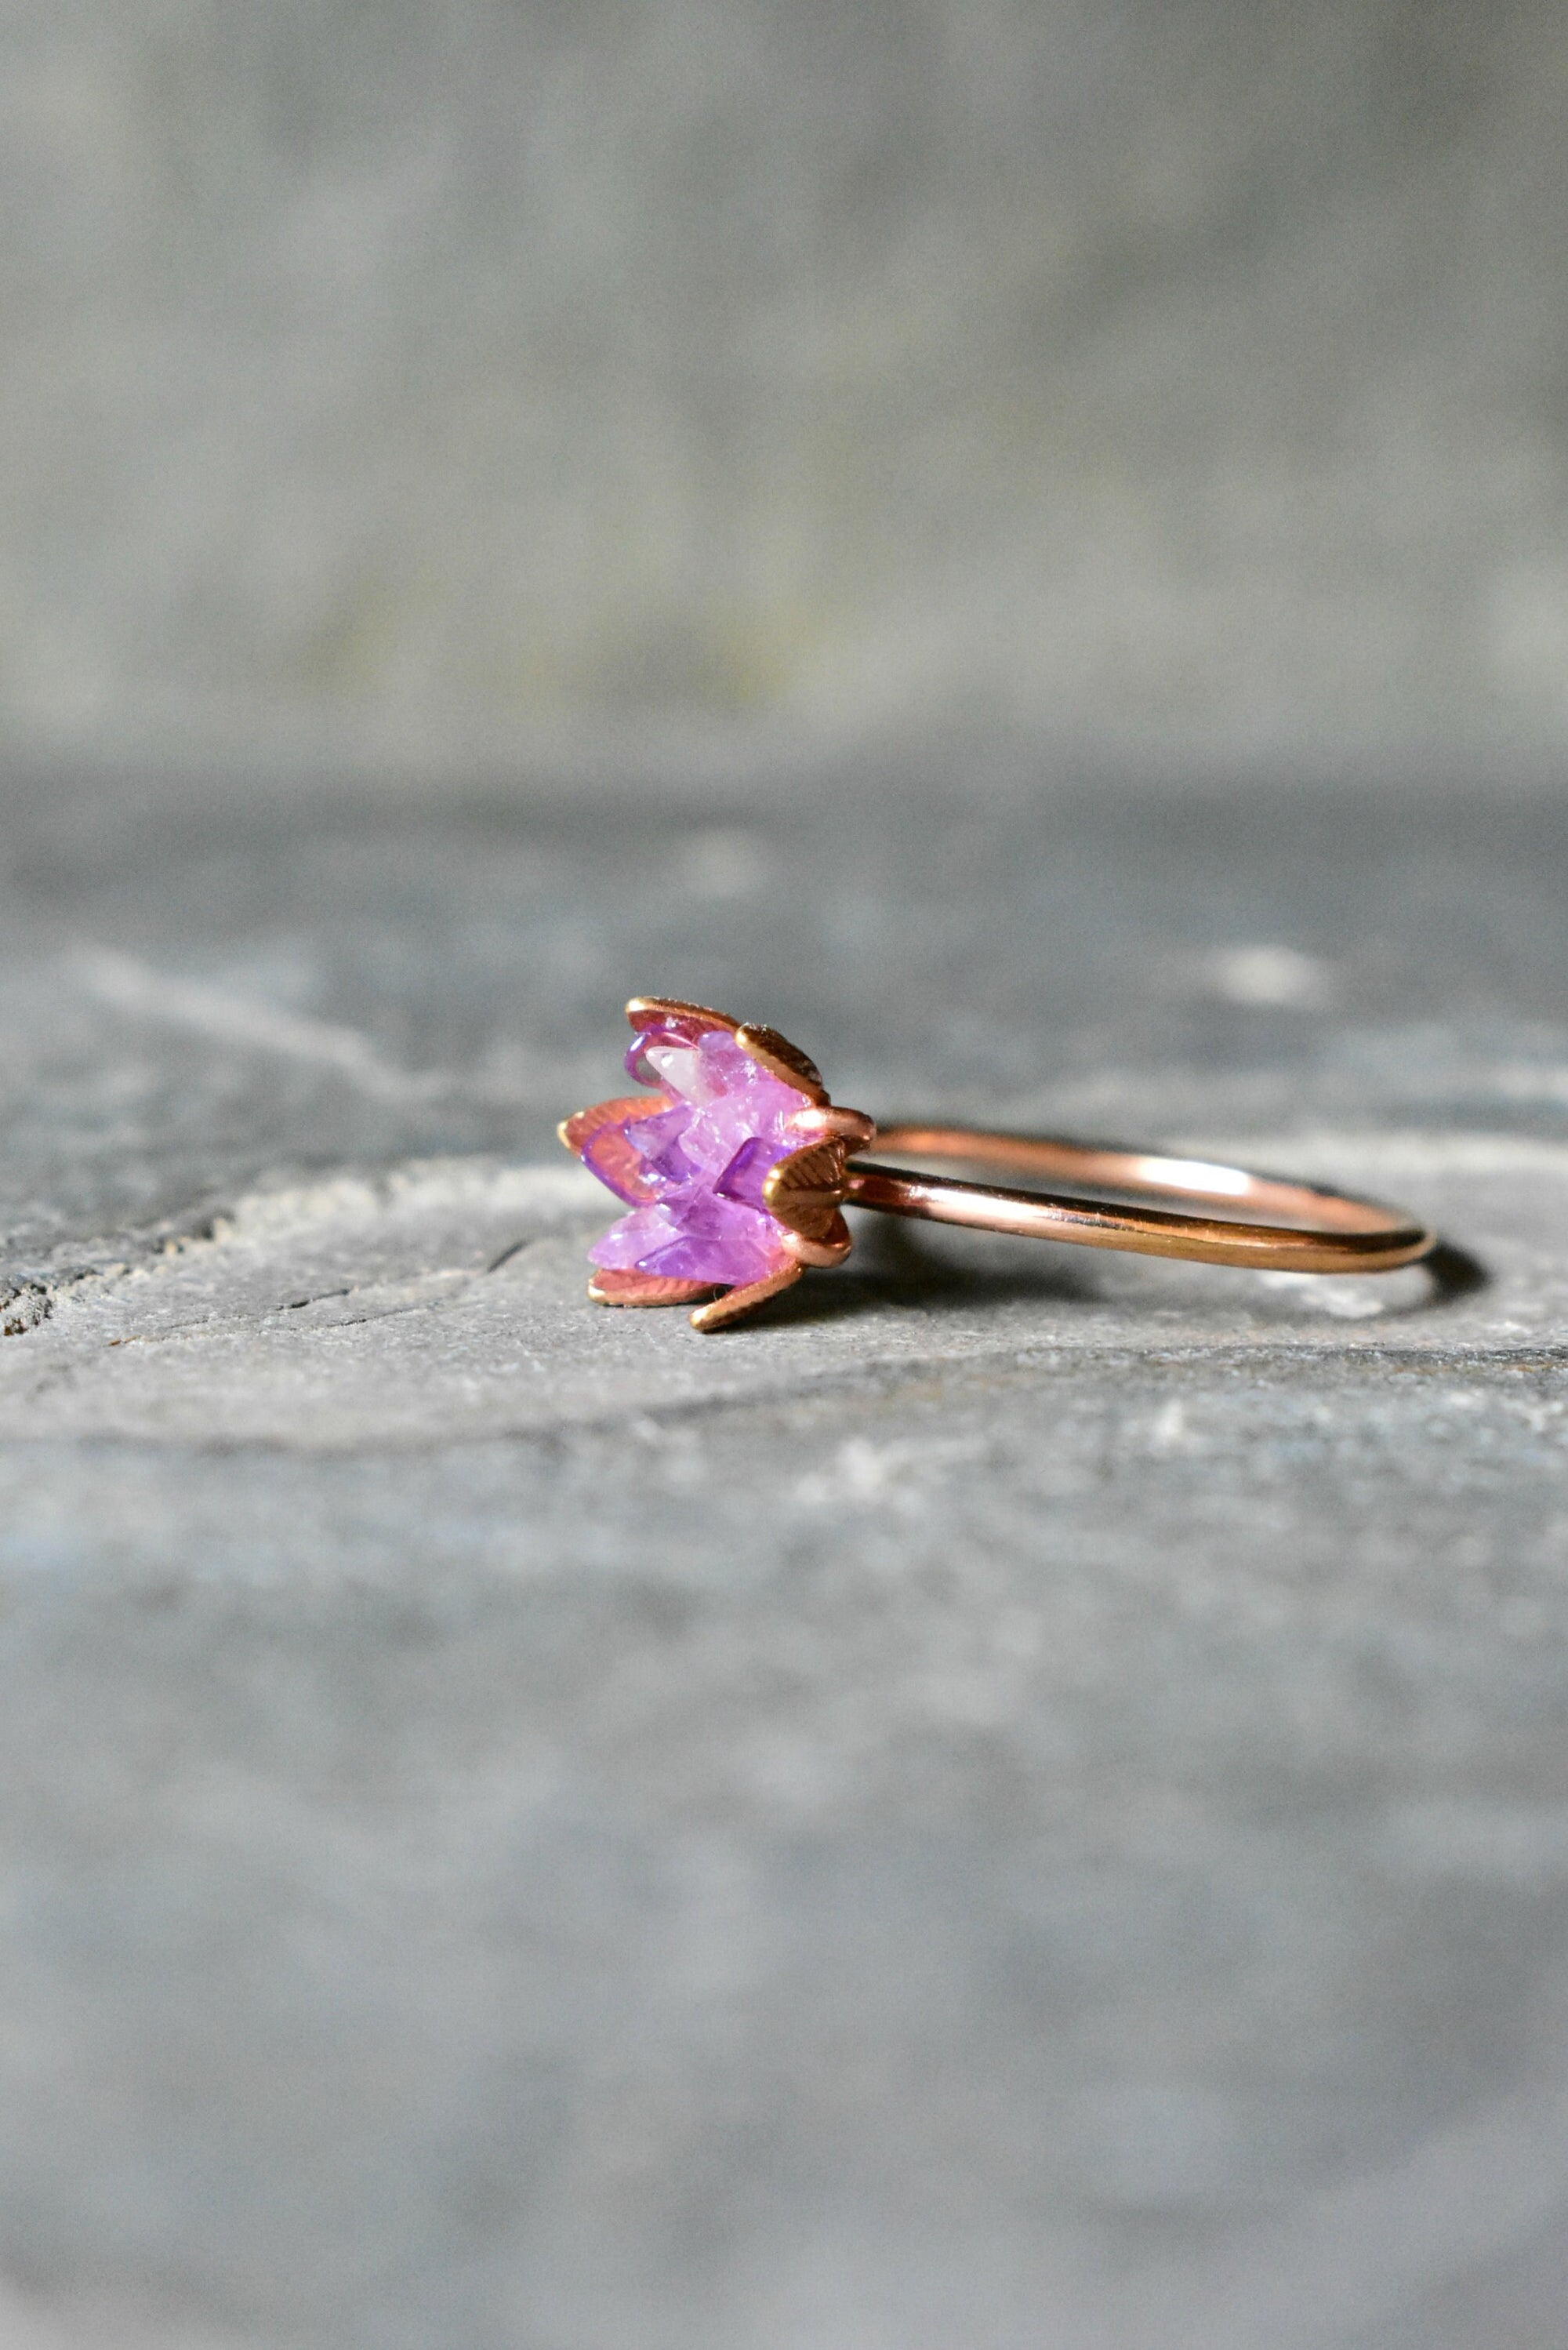 Unique Amethyst Ring, Lotus Flower Ring in Rose Gold, Uncut Gemstone Birthstone Ring, Raw Rough Amethyst Jewelry, January Birthstone Ring